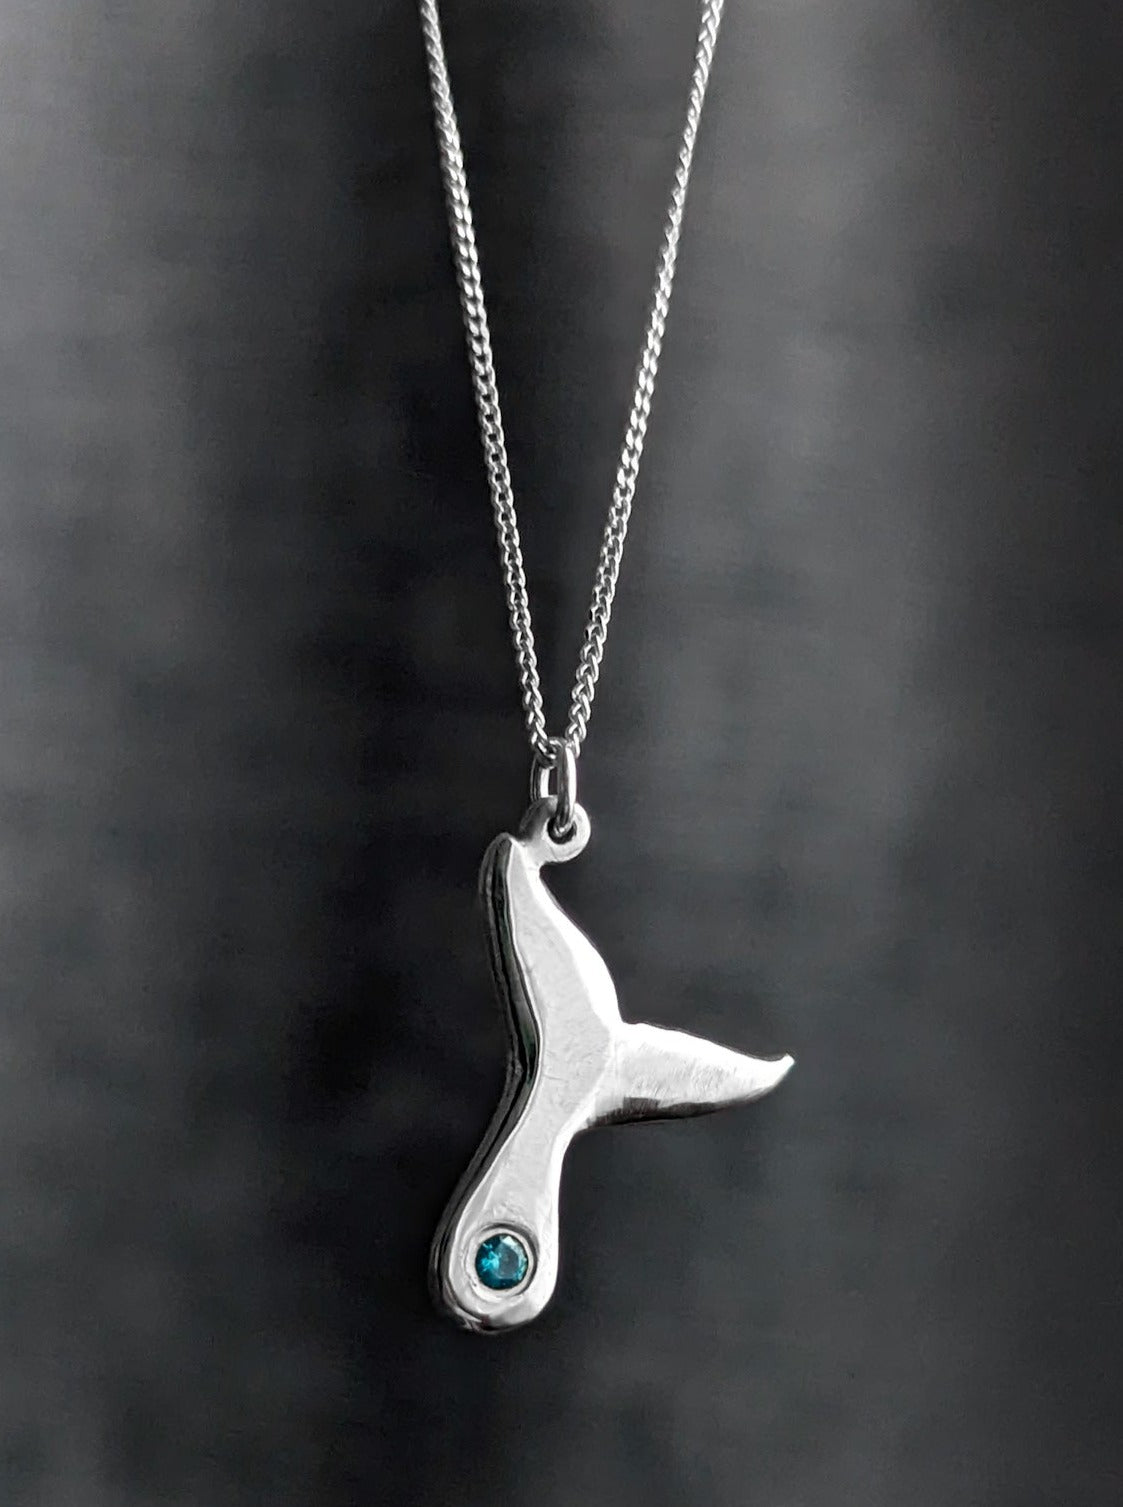 Shiny silver whale fluke pendant with blue birthstone